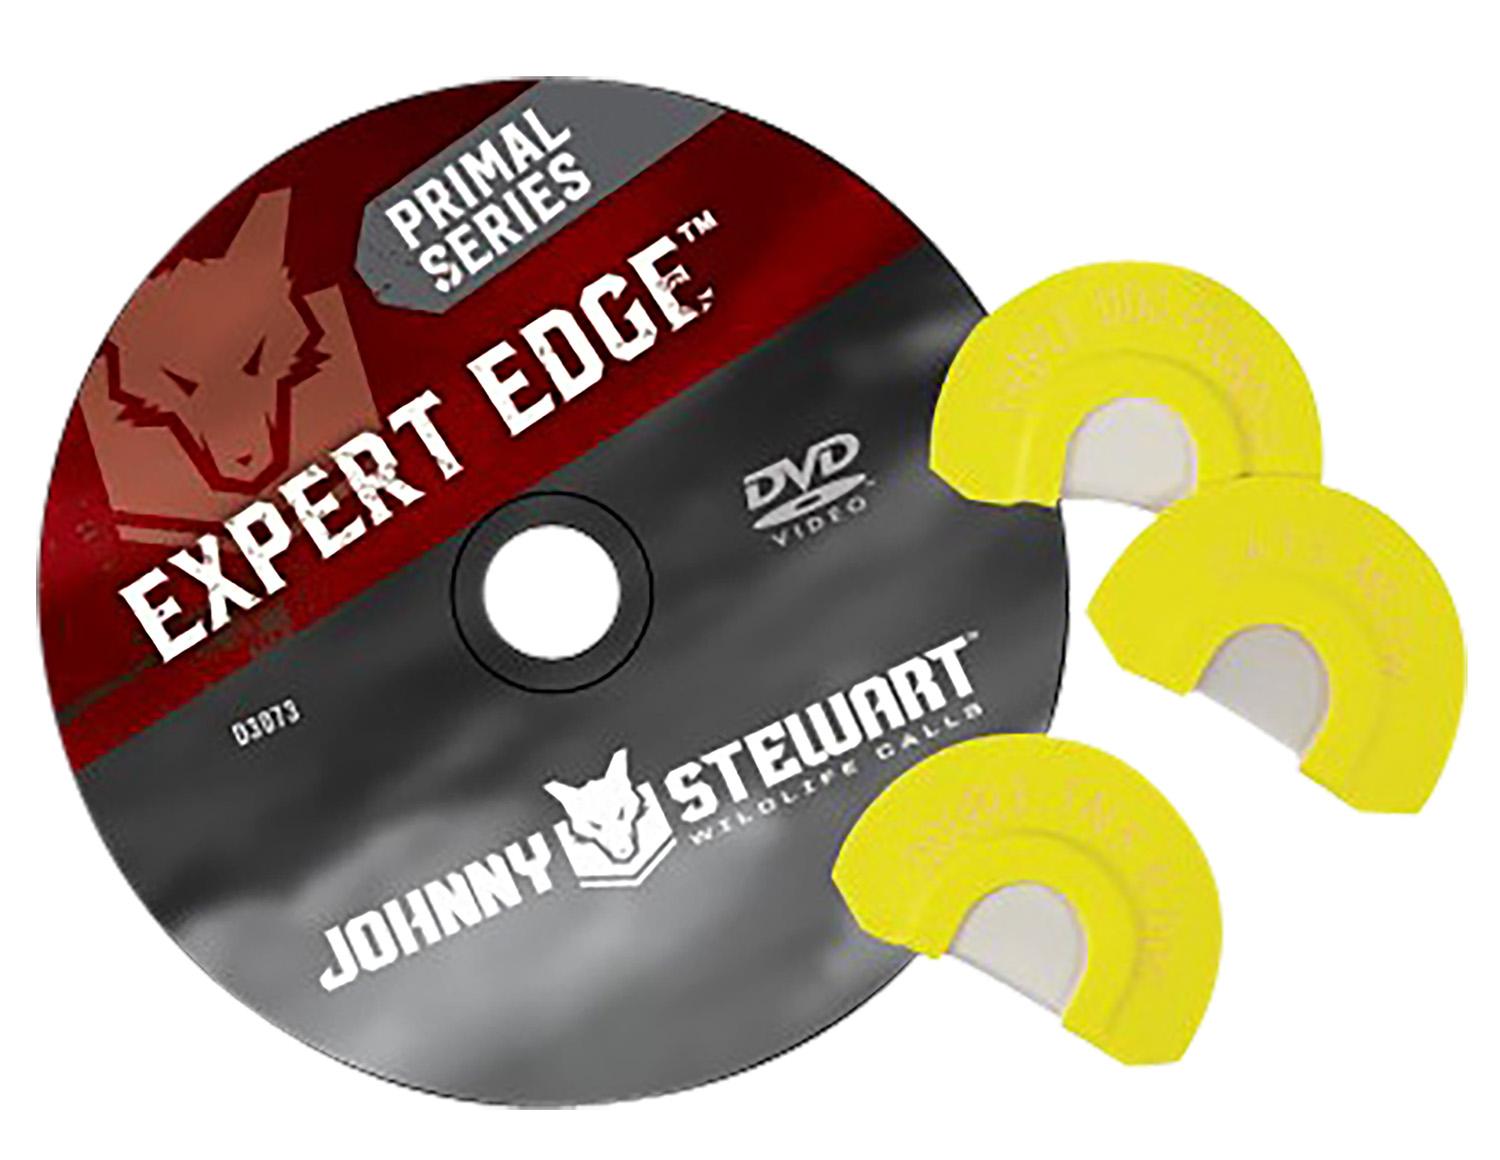 Johnny Stewart Wildlife Calls JSDIA4 Expert Edge Combo Pack 3 Diaphragm Attracts Predator Species Yellow Includes